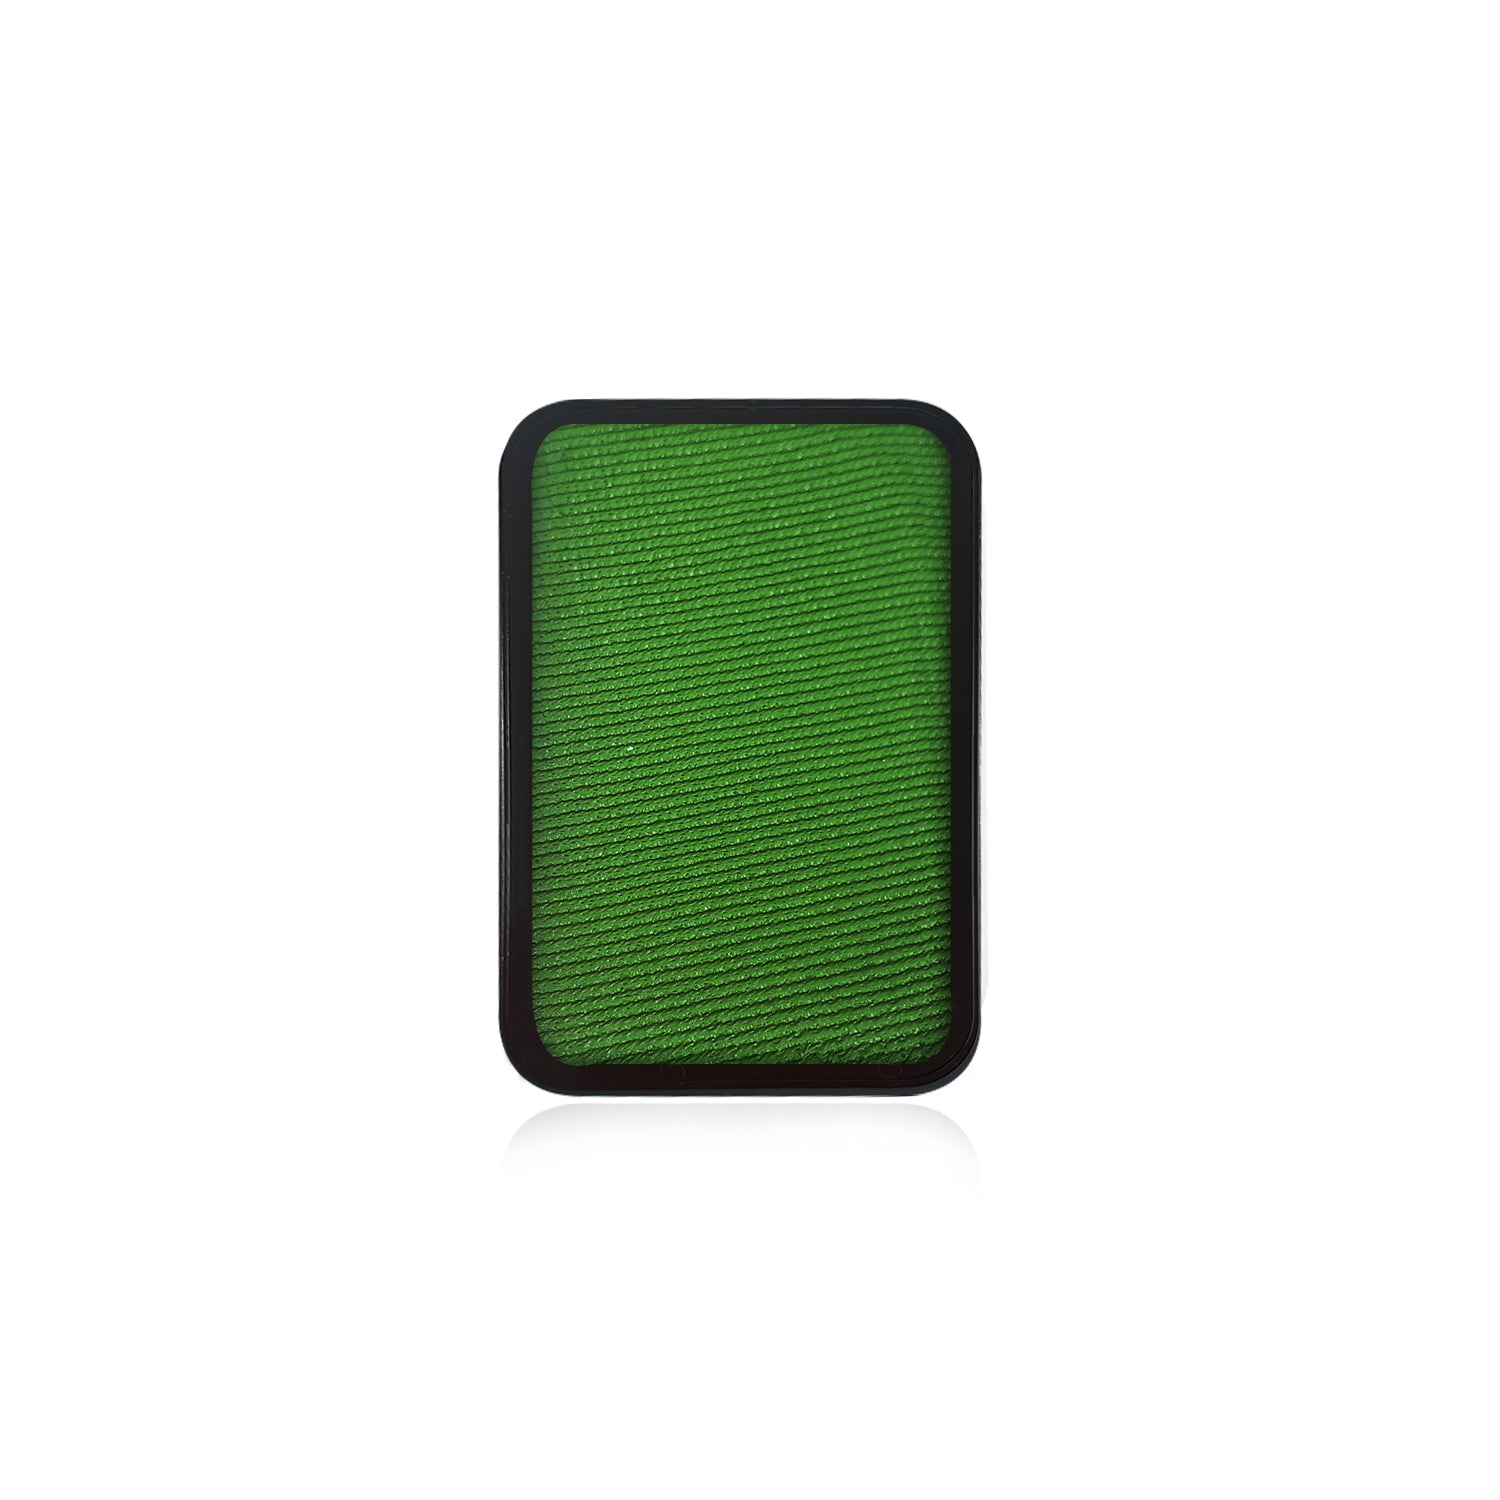 Kraze Face Paint Palette Refill - Green (0.35 oz/10 gm)